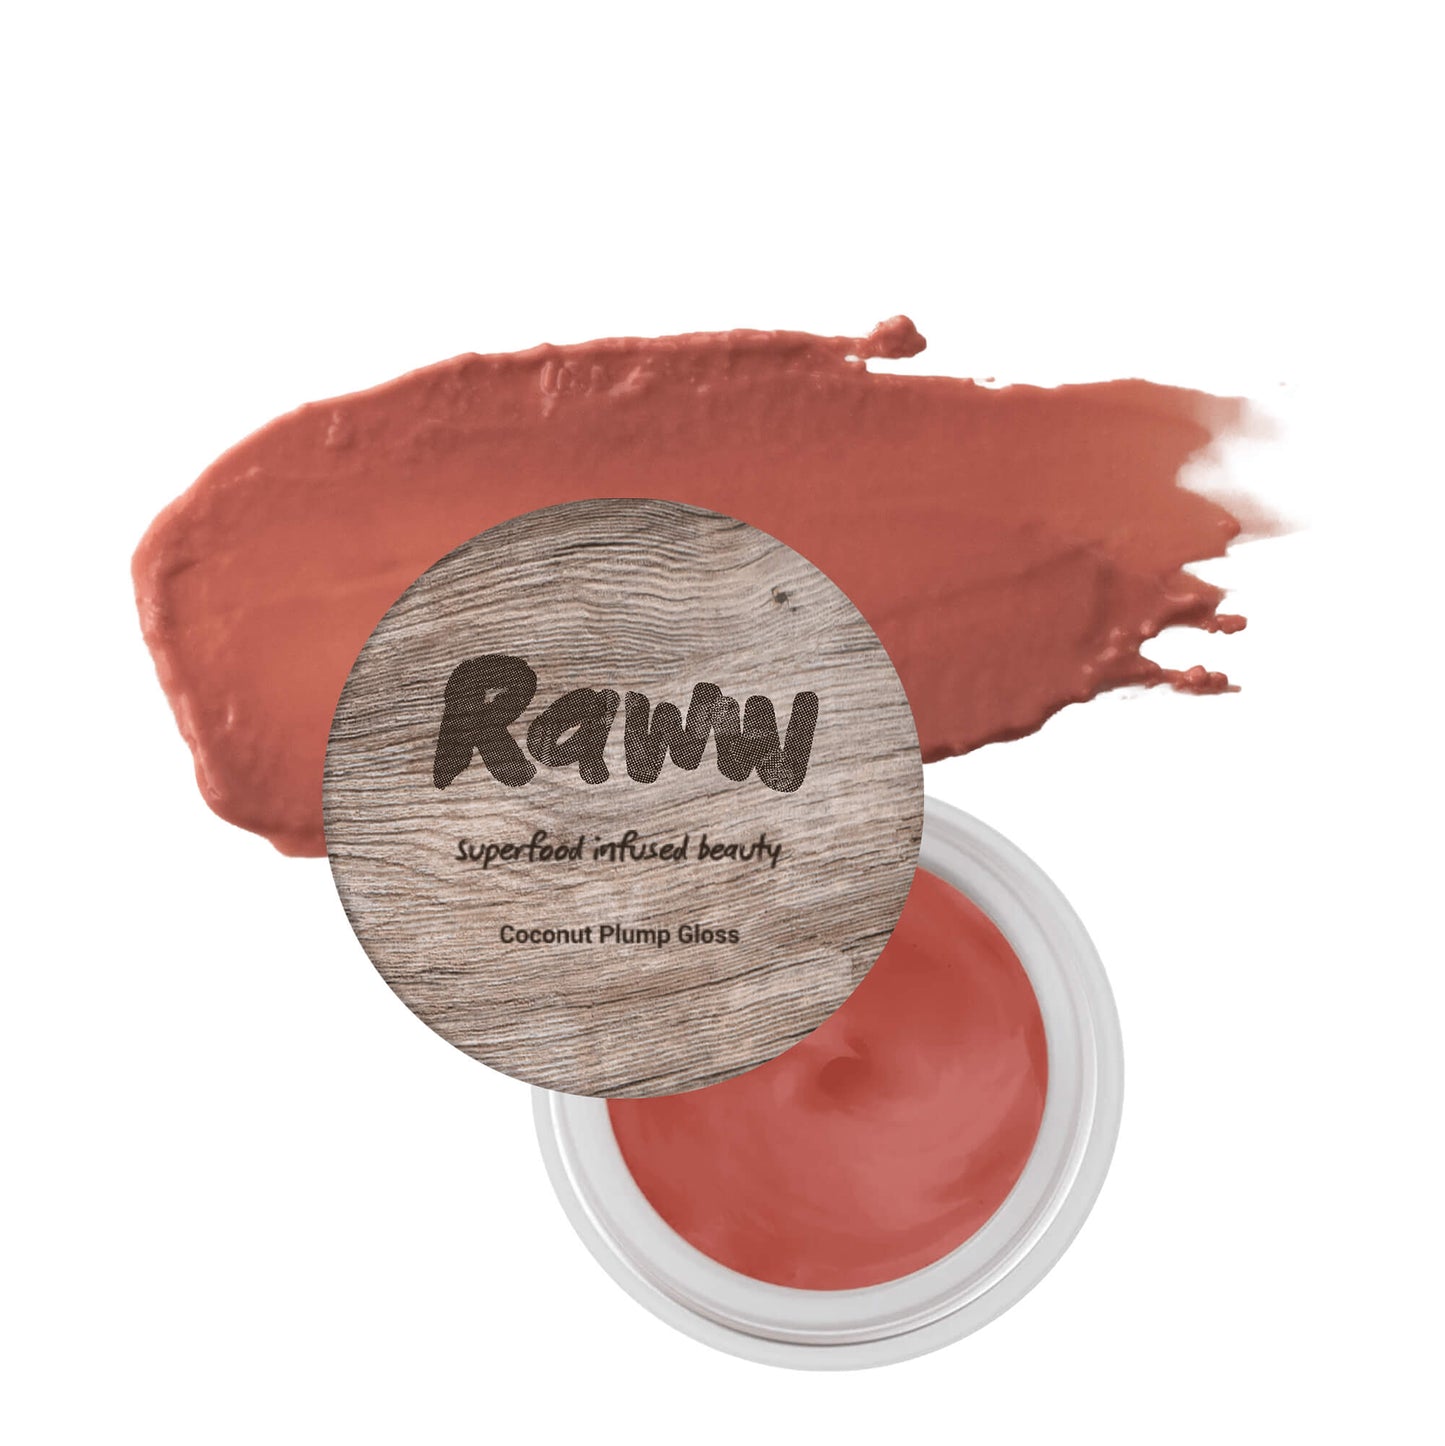 Coconut Plump Gloss (Apple-tini) | RAWW Cosmetics | Product + Swatch